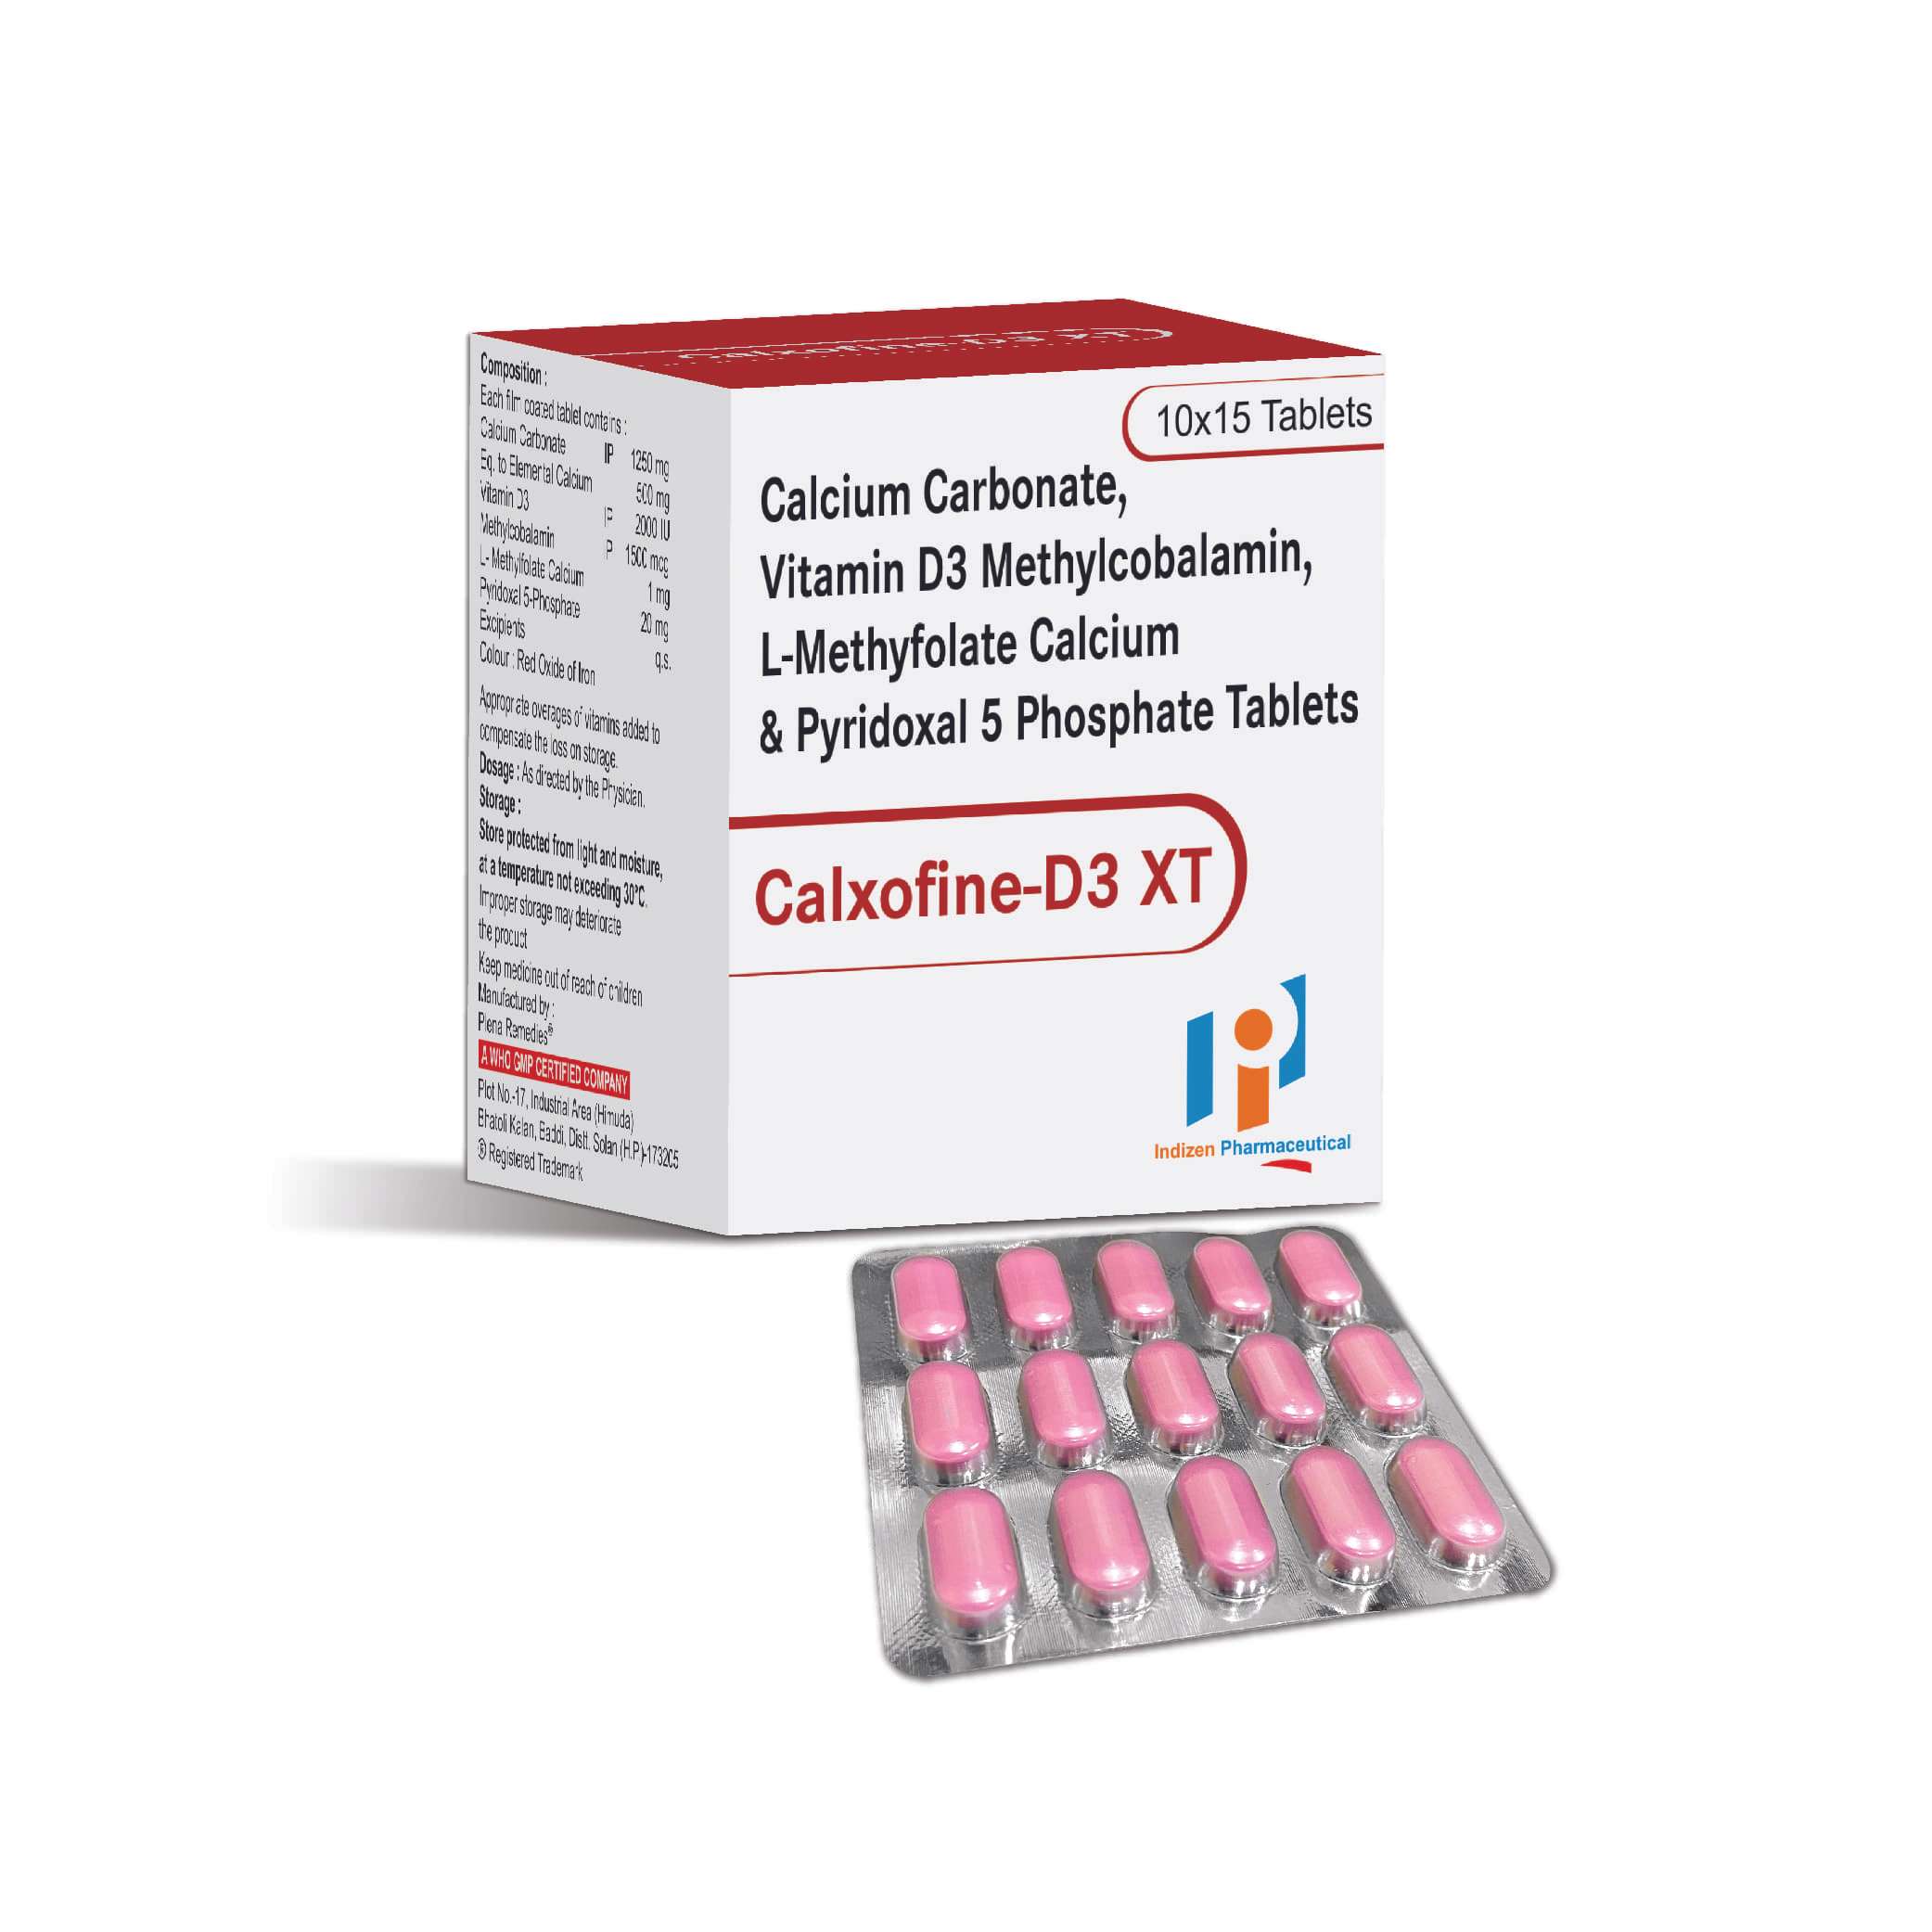 calcium carbonate 1250 mg eq. to elemental calcium 500 mg + vitamin d3 2000 iu + methylcobalamin 1500 mcg + l-methylfolate 1 mg + pyridoxal -5 phosphate - 20 mg